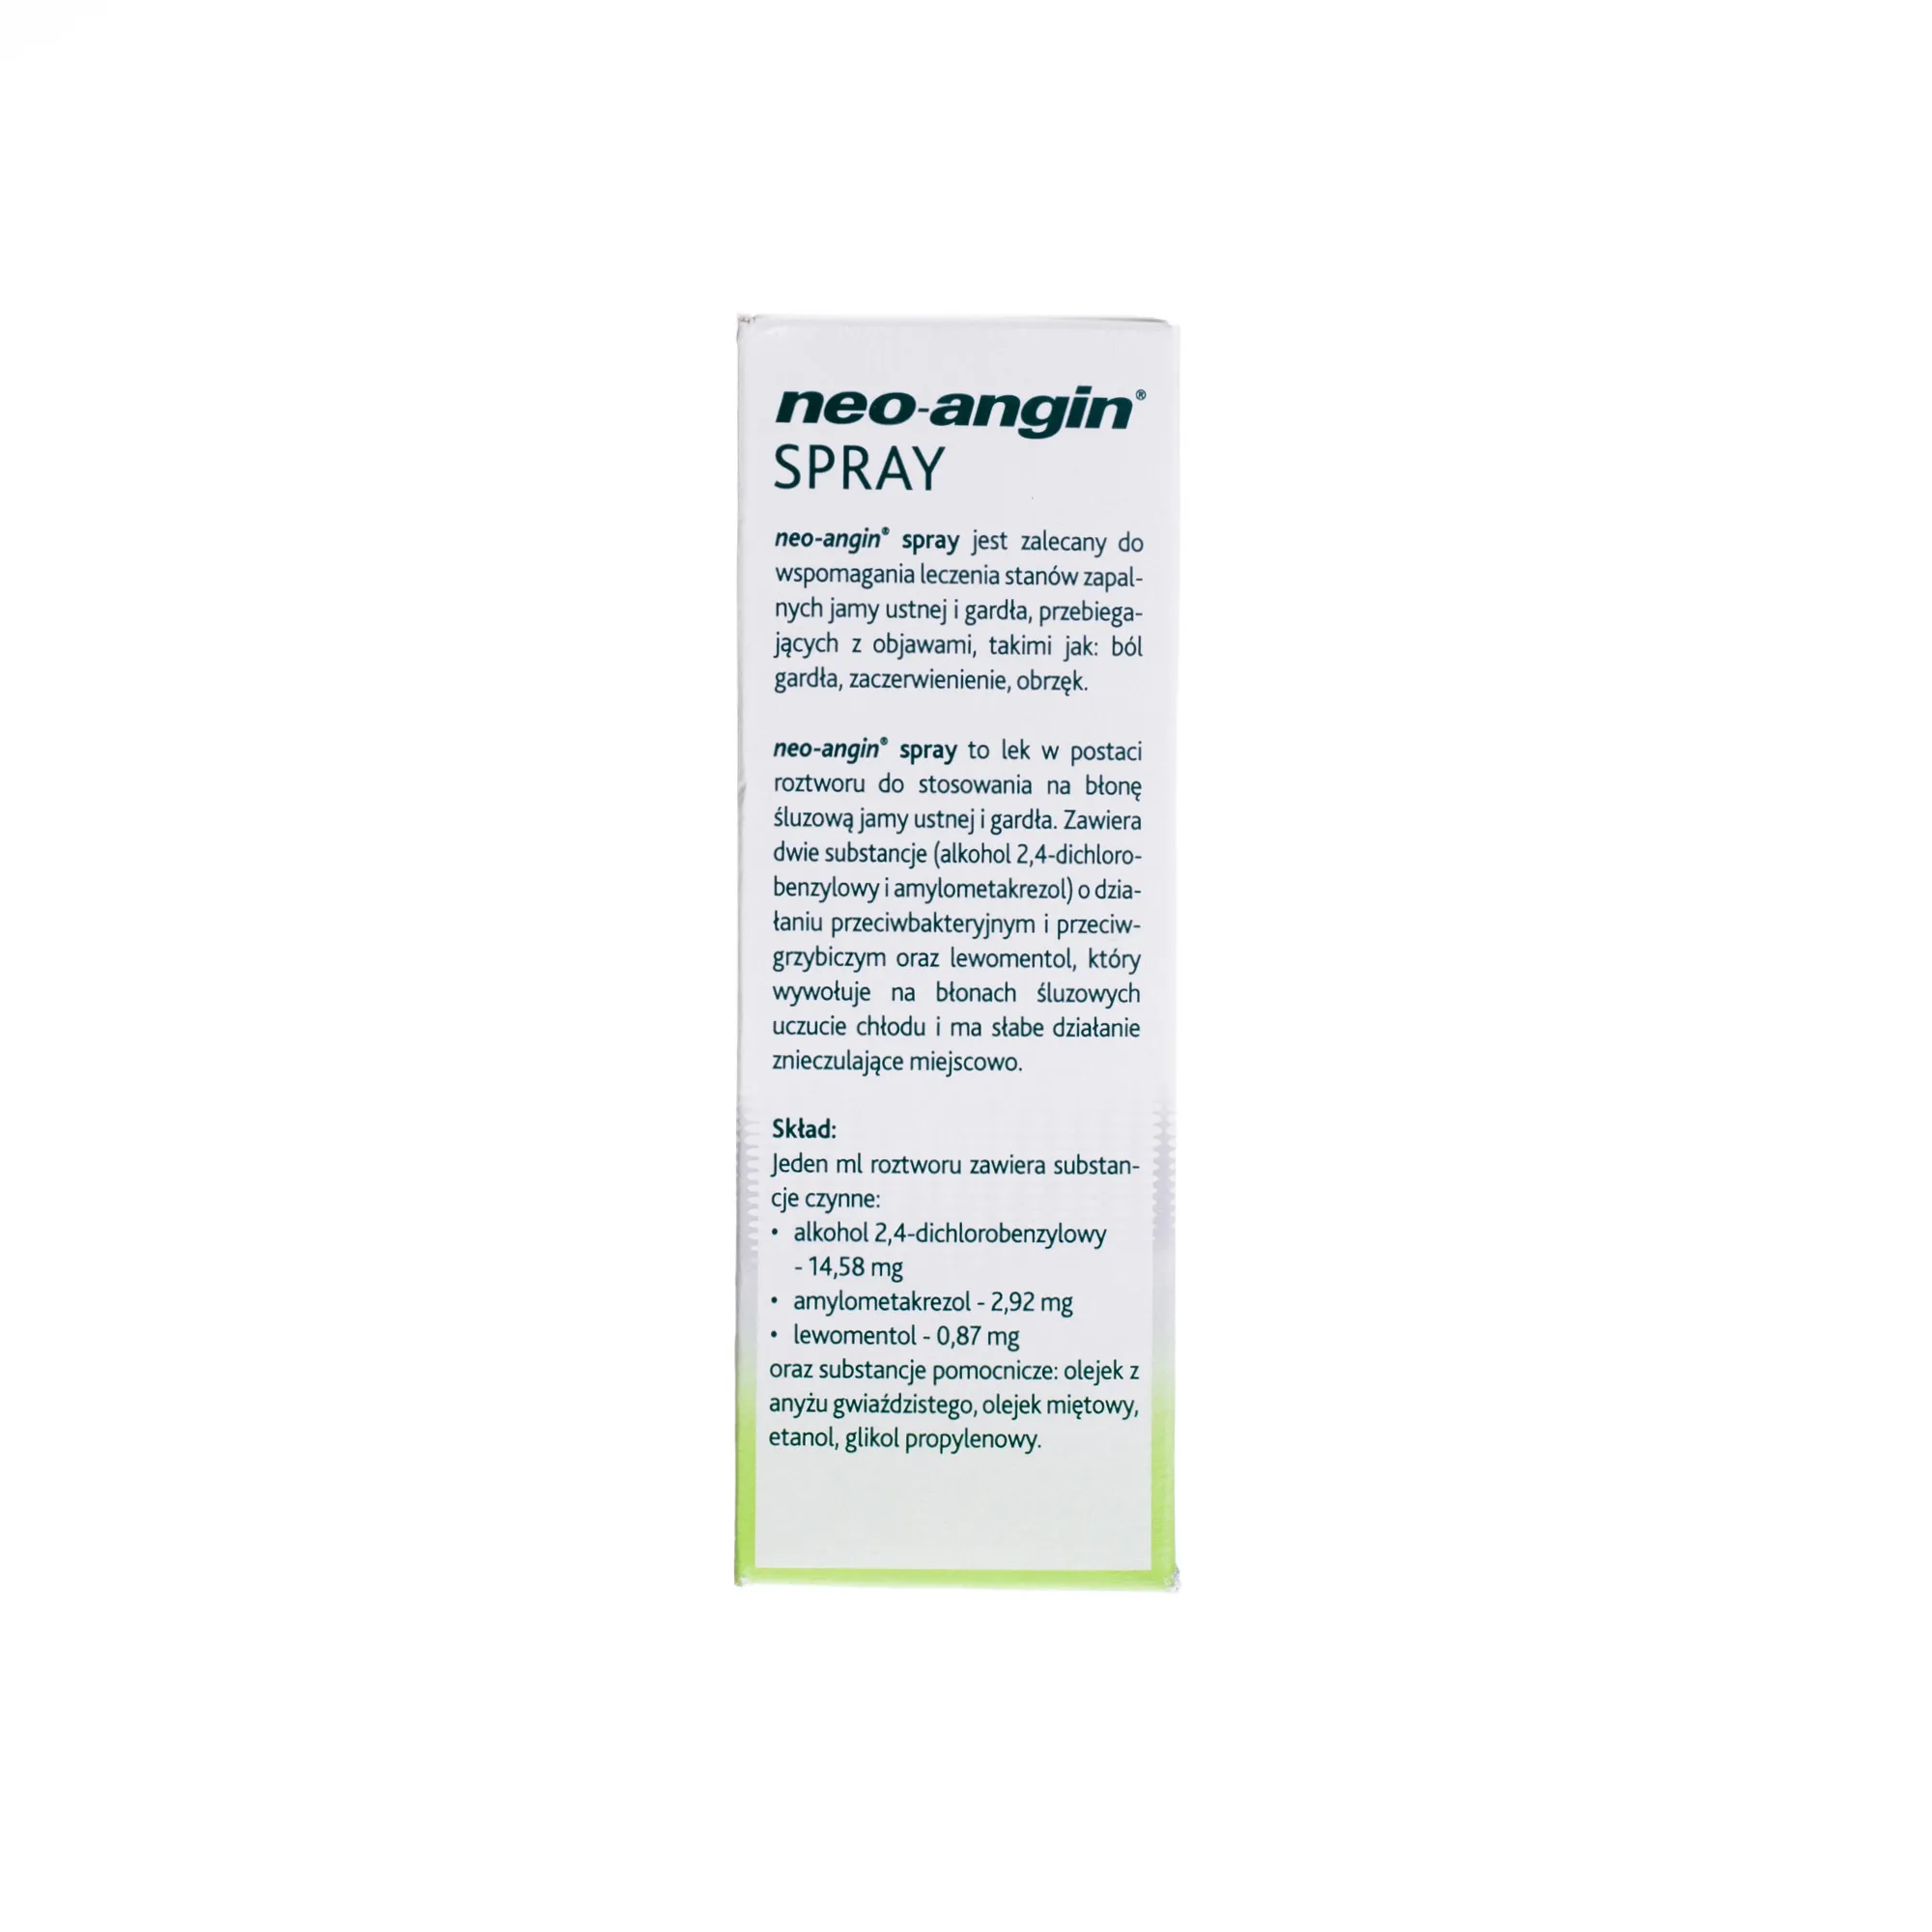 Neo-angin spray(14,58 mg+ 2,92 mg+ 0,87 mg)/ml 